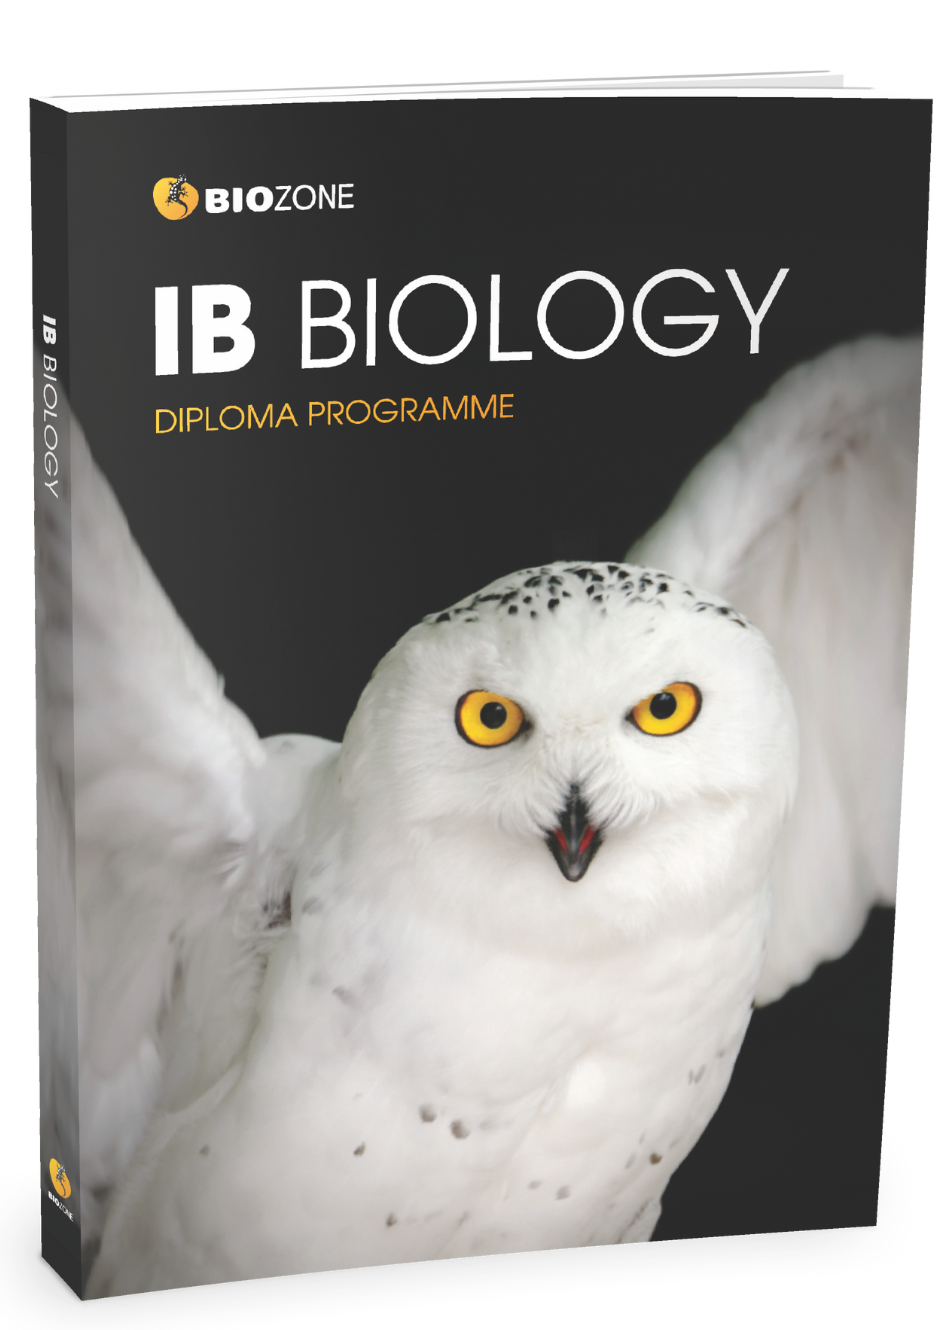 IB biology